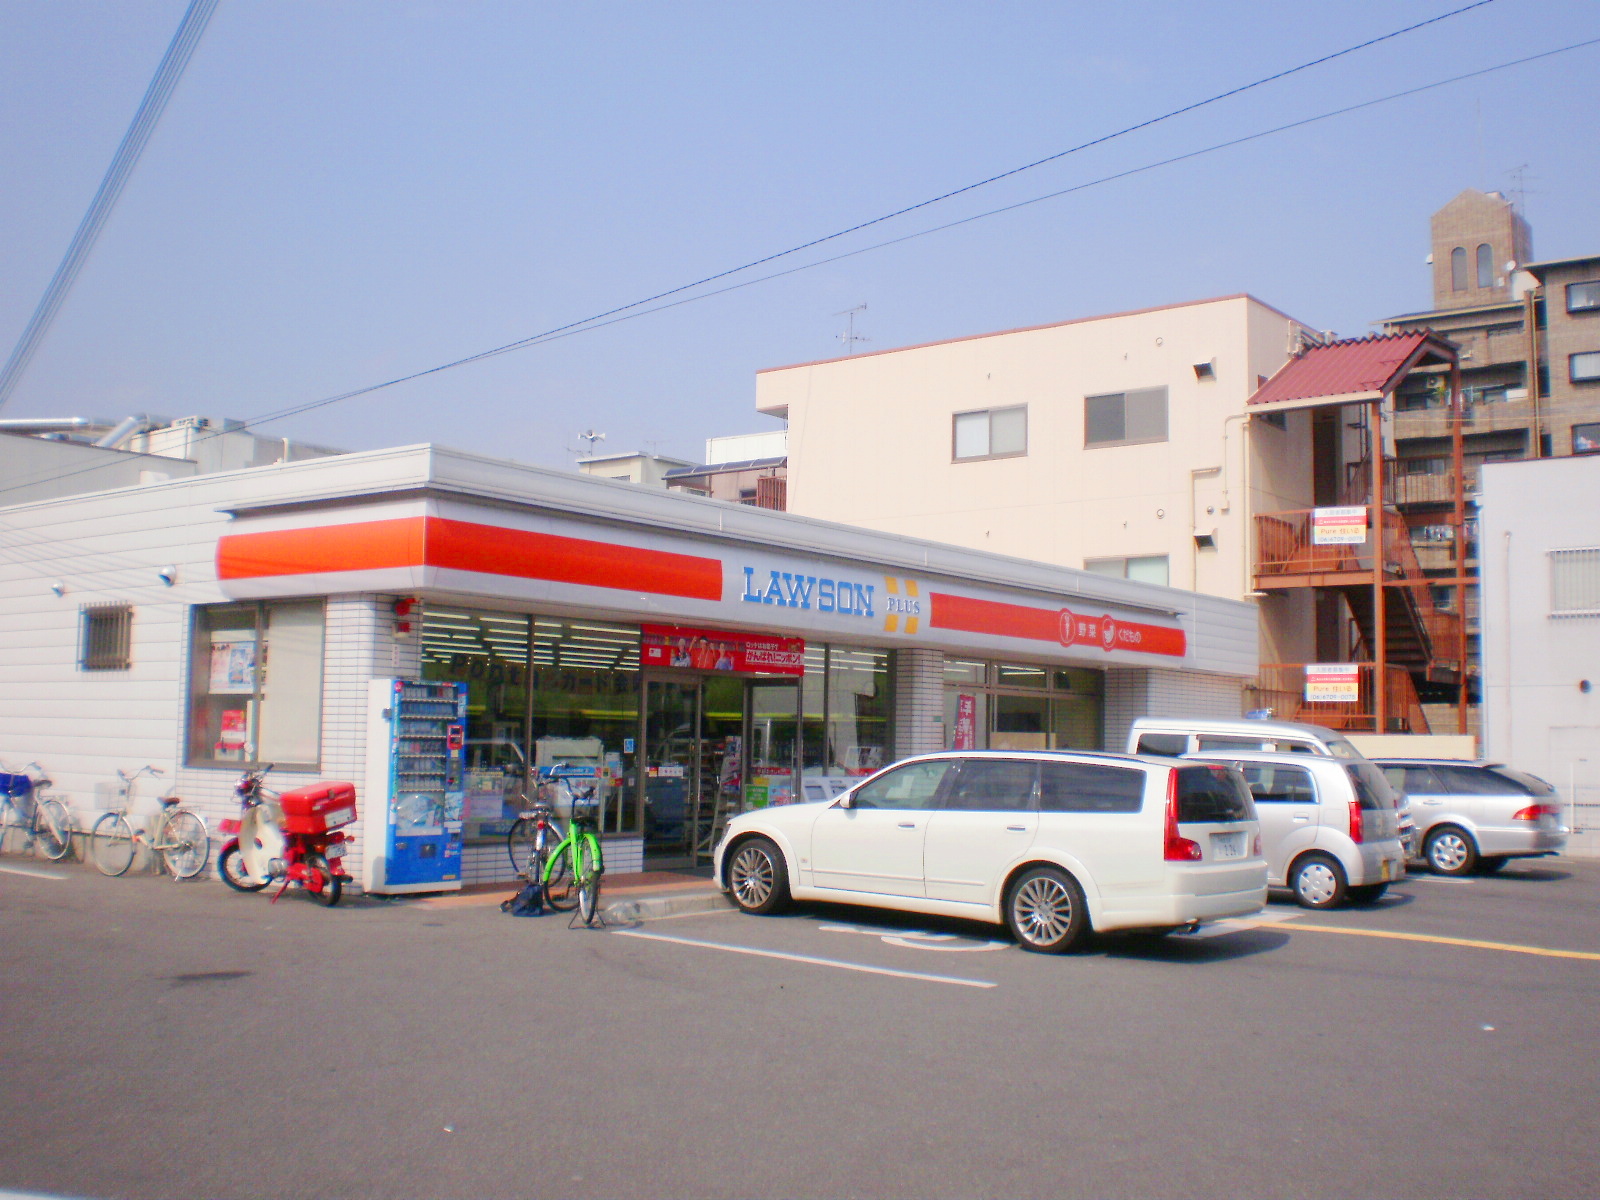 Convenience store. 579m until Lawson plus Uriwari store (convenience store)